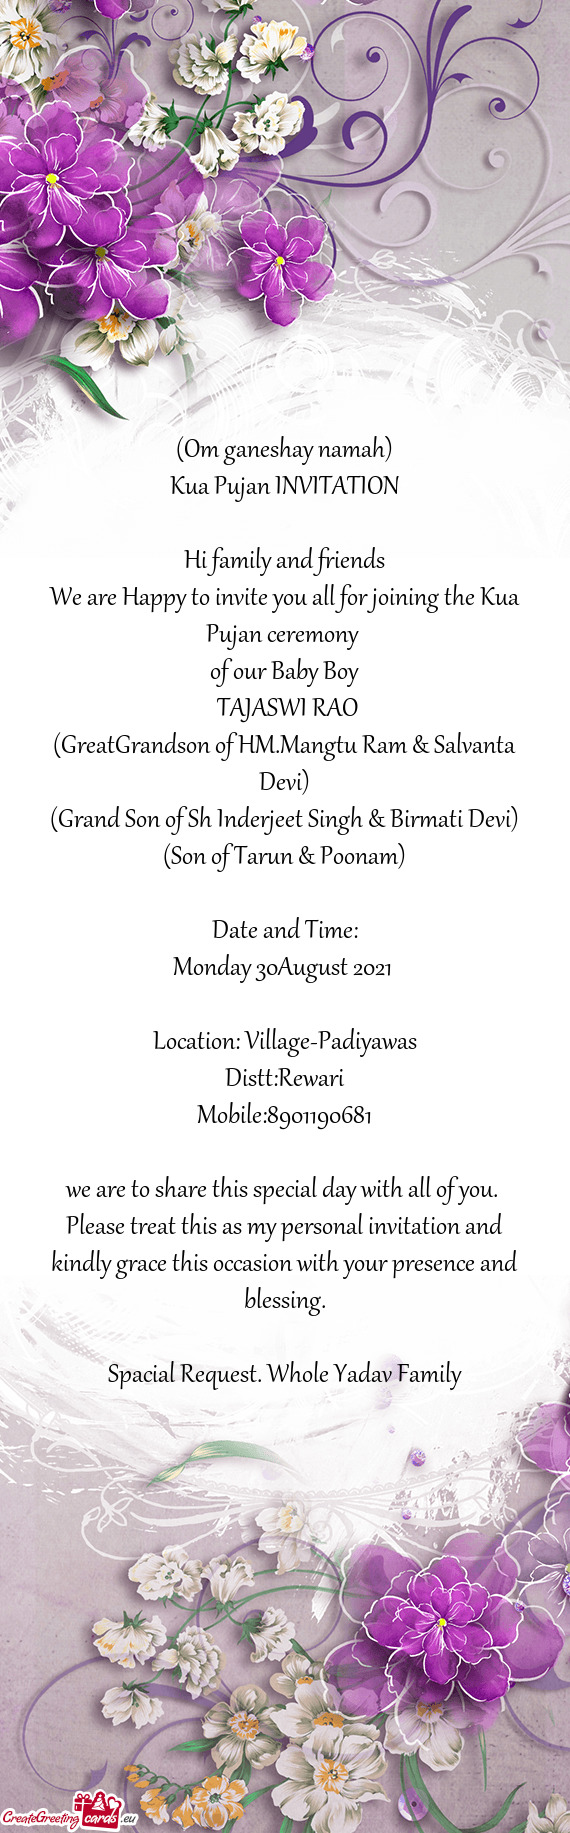 (Grand Son of Sh Inderjeet Singh & Birmati Devi)